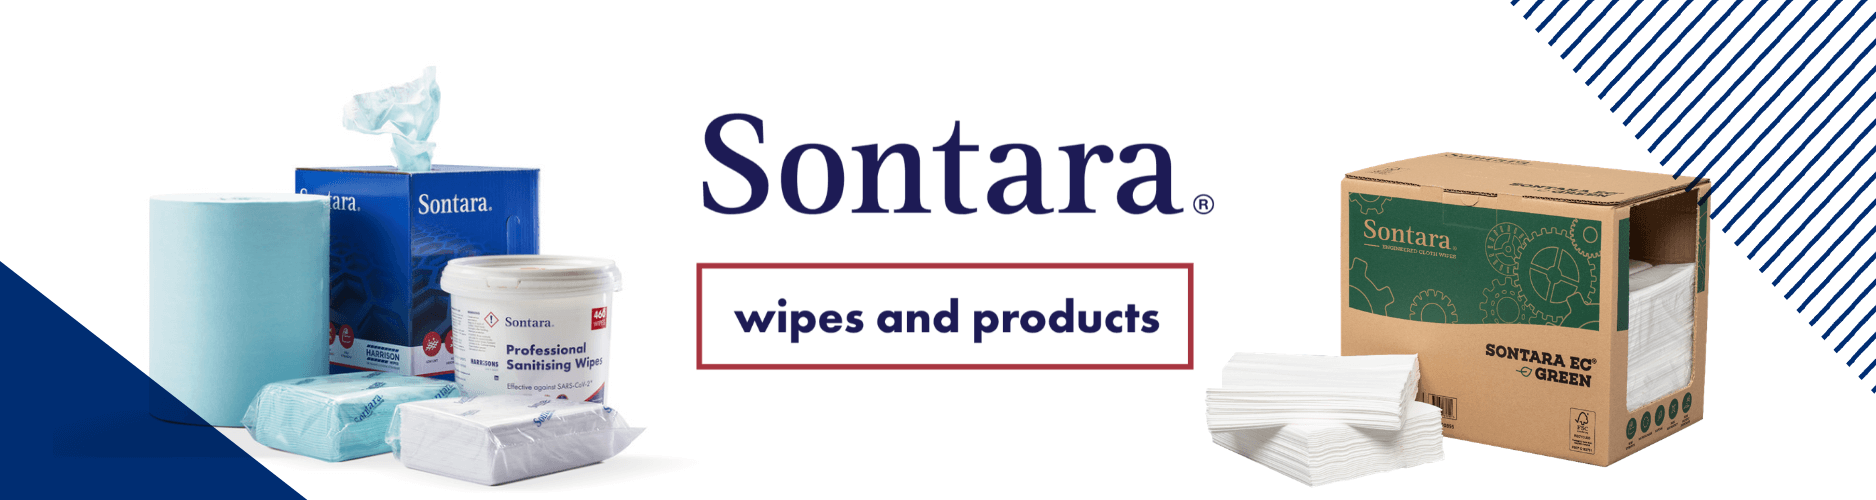 Sontara EC® wipes 